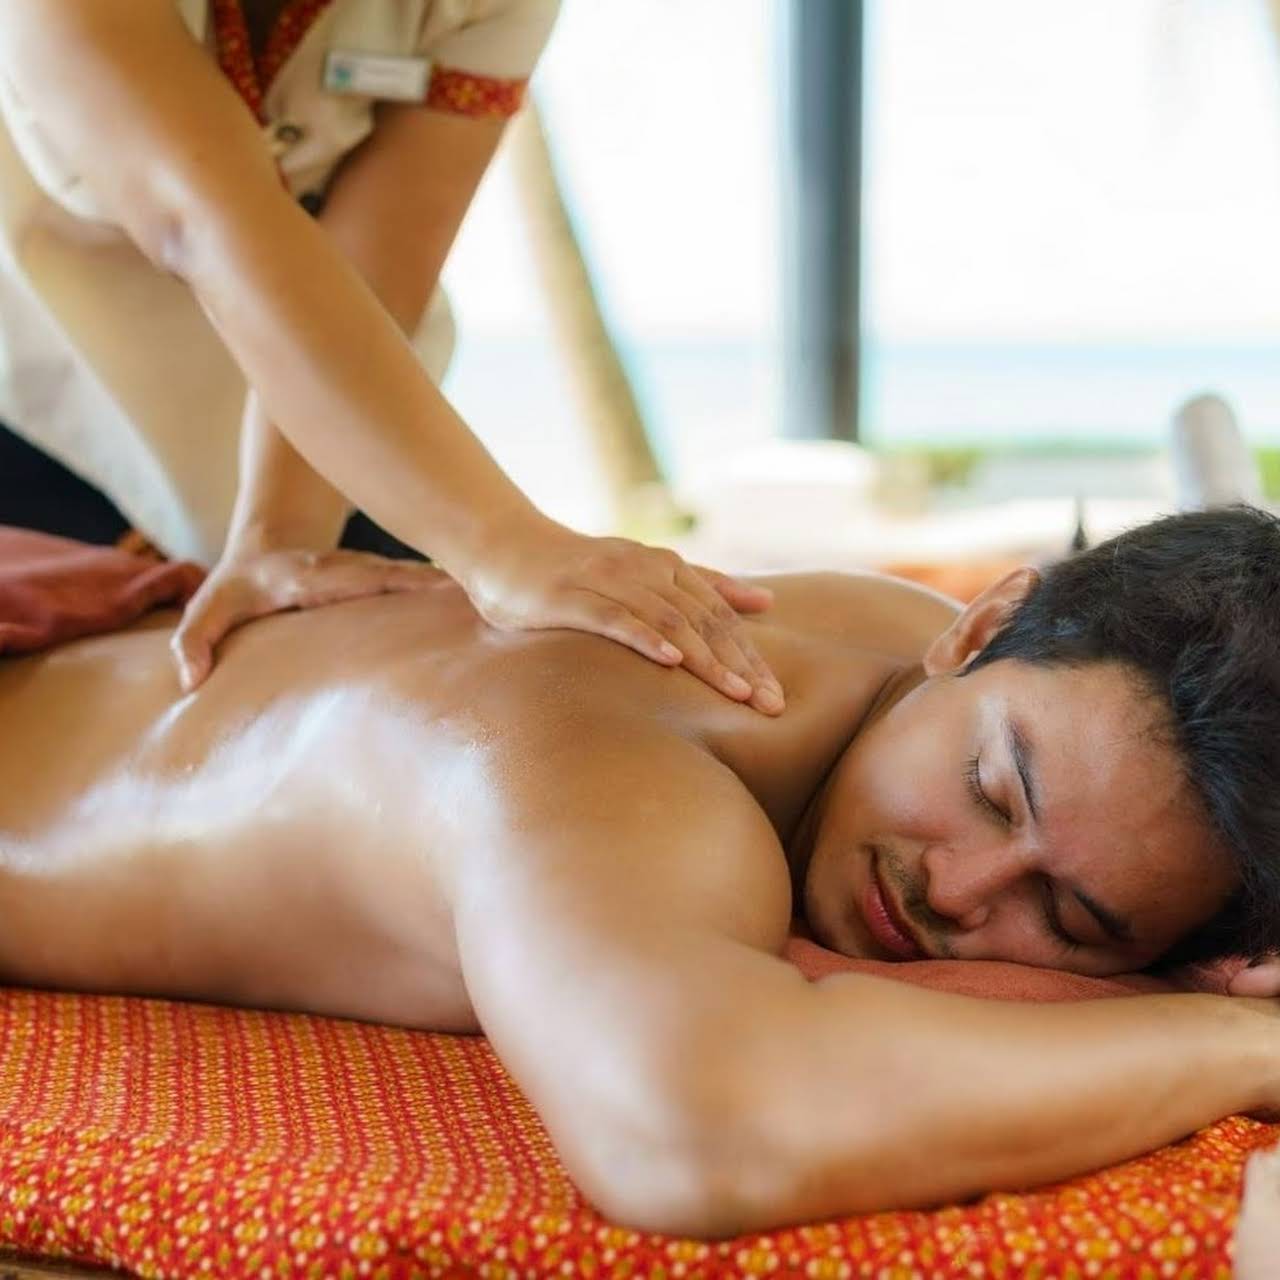 Body to body massage by girls Bambore 9784700979 - Rajasthan - Jaipur ID1561797